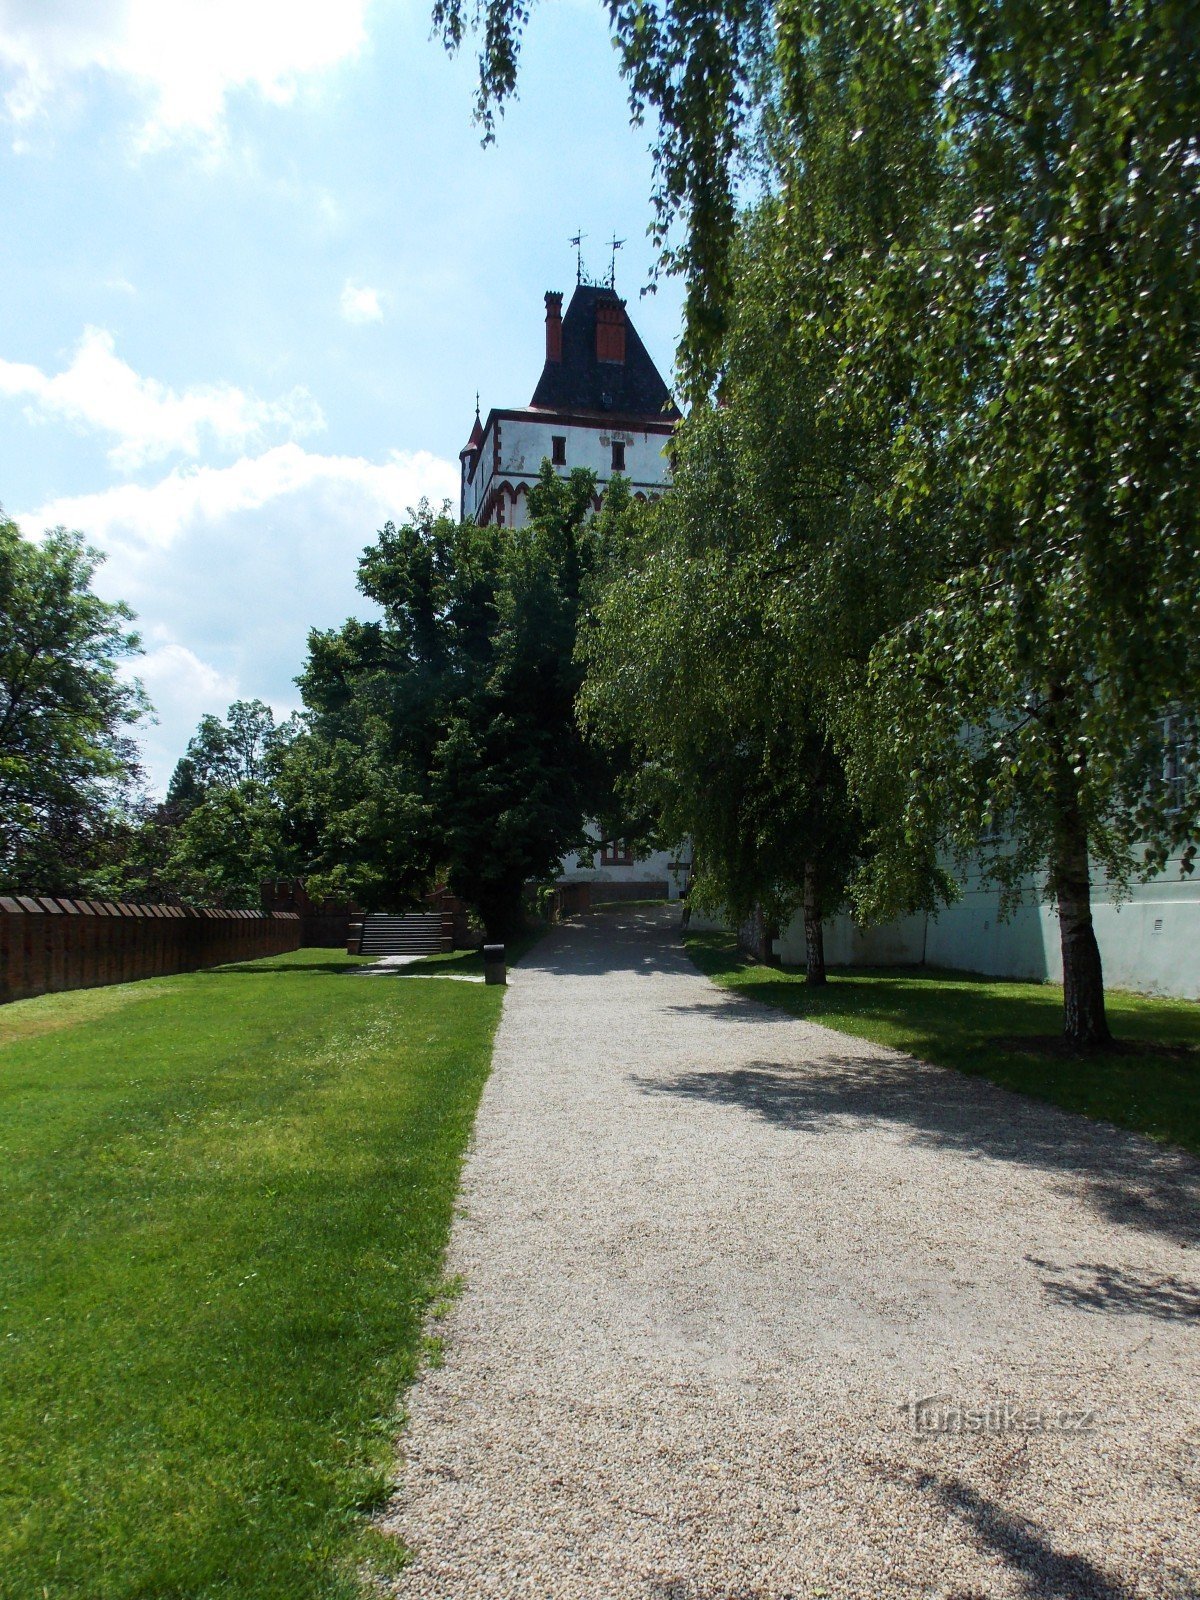 Bijeli vodotoranj u parku dvorca u Hradec nad Moravicí